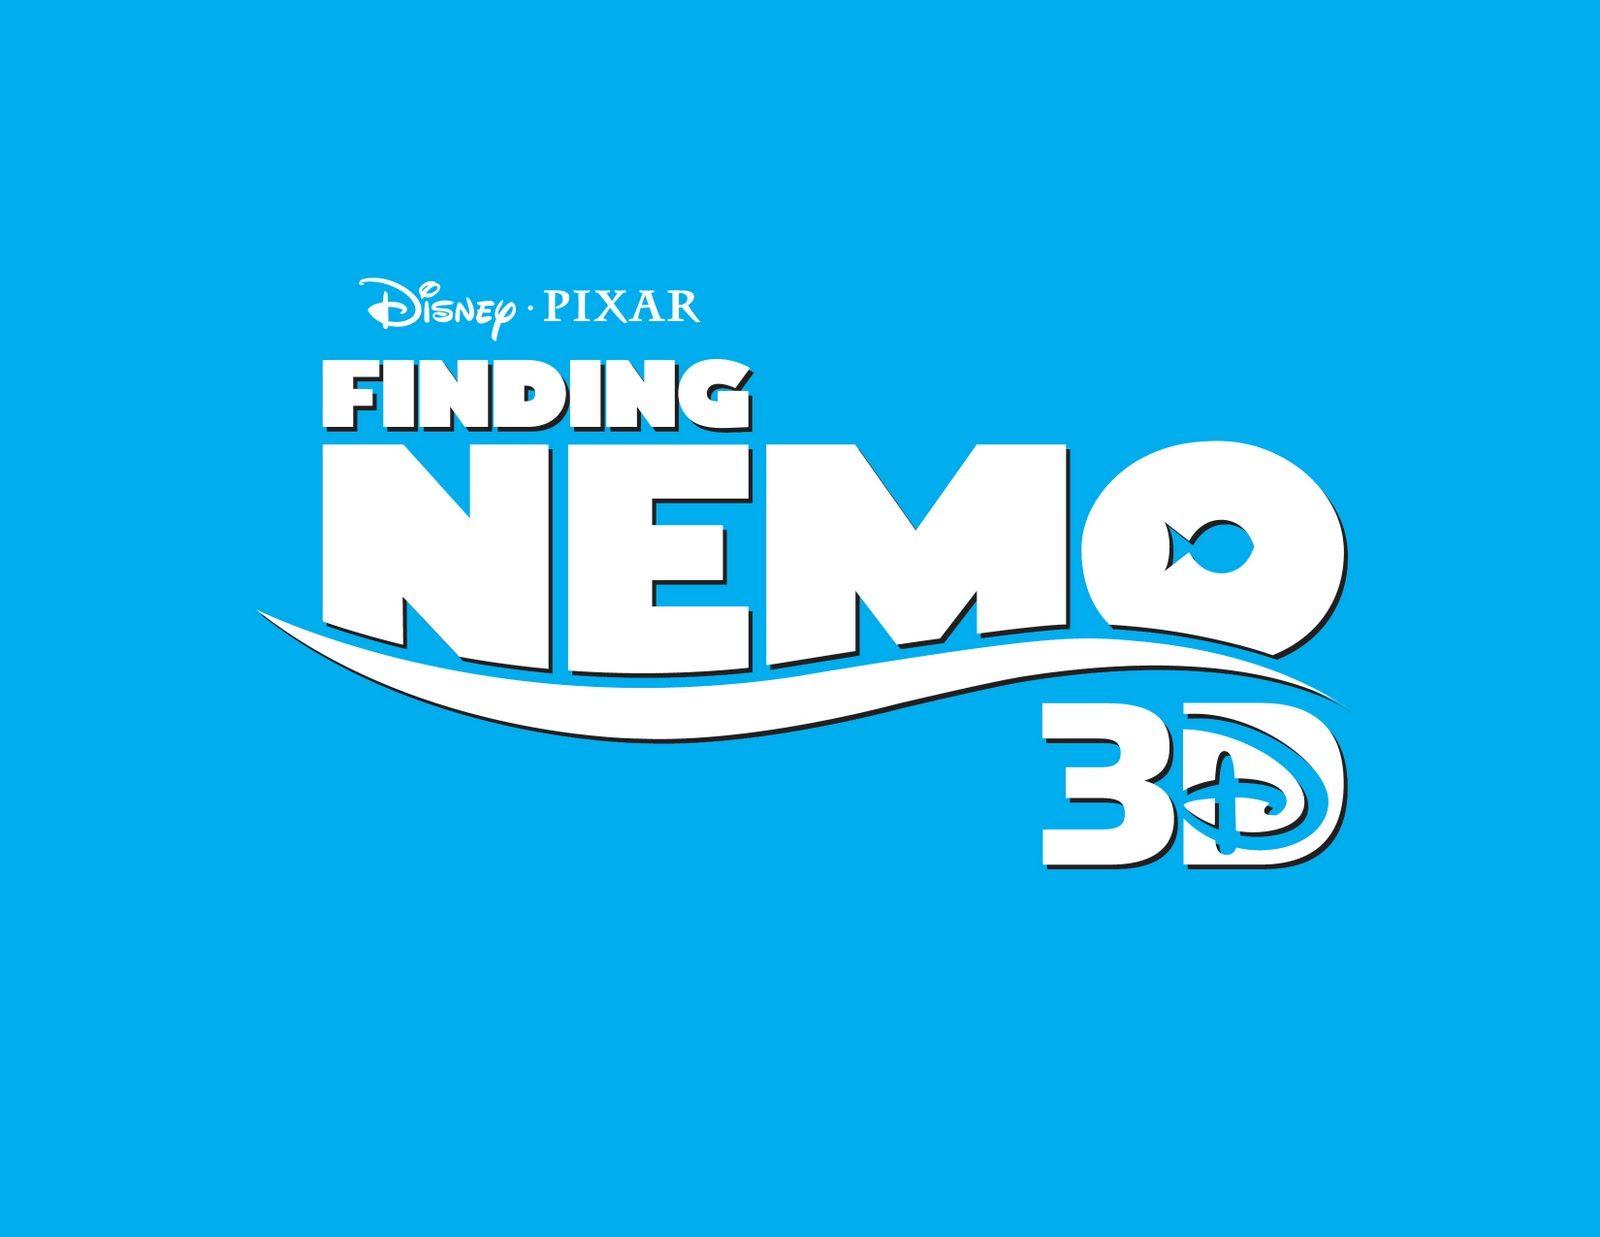 Disney Pixar Finding Nemo Logo - Finding Nemo 3D Sneak Peek (Trailer) | The Attic Girl